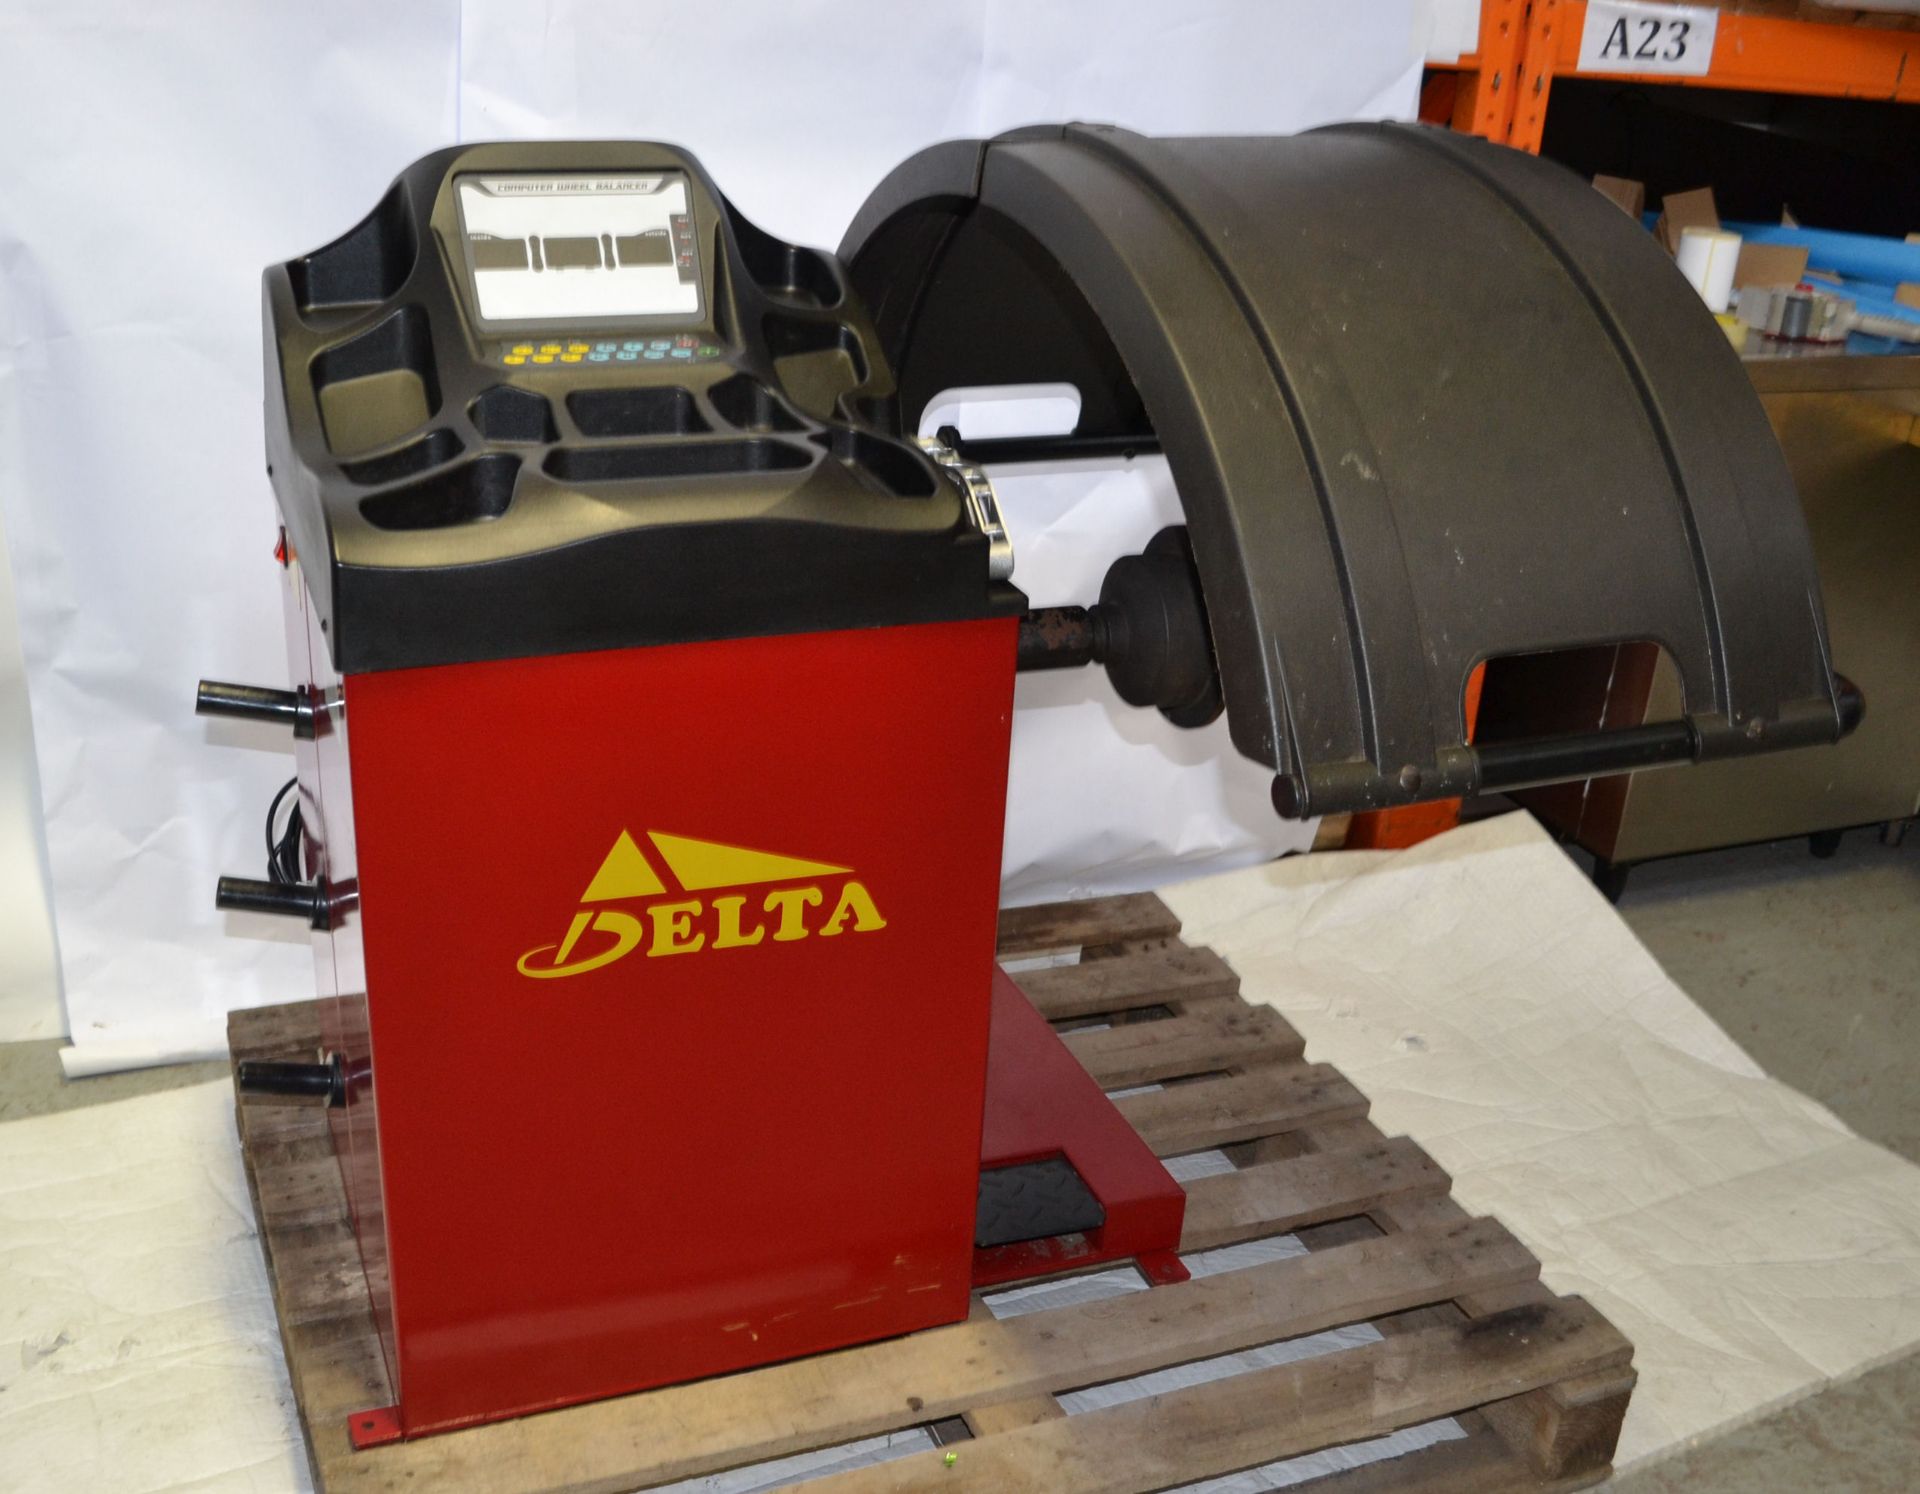 1 x Delta Workshop Wheel Balancer - Model SBM95AP - Excellent Condition - CL007 - Location: - Image 15 of 15